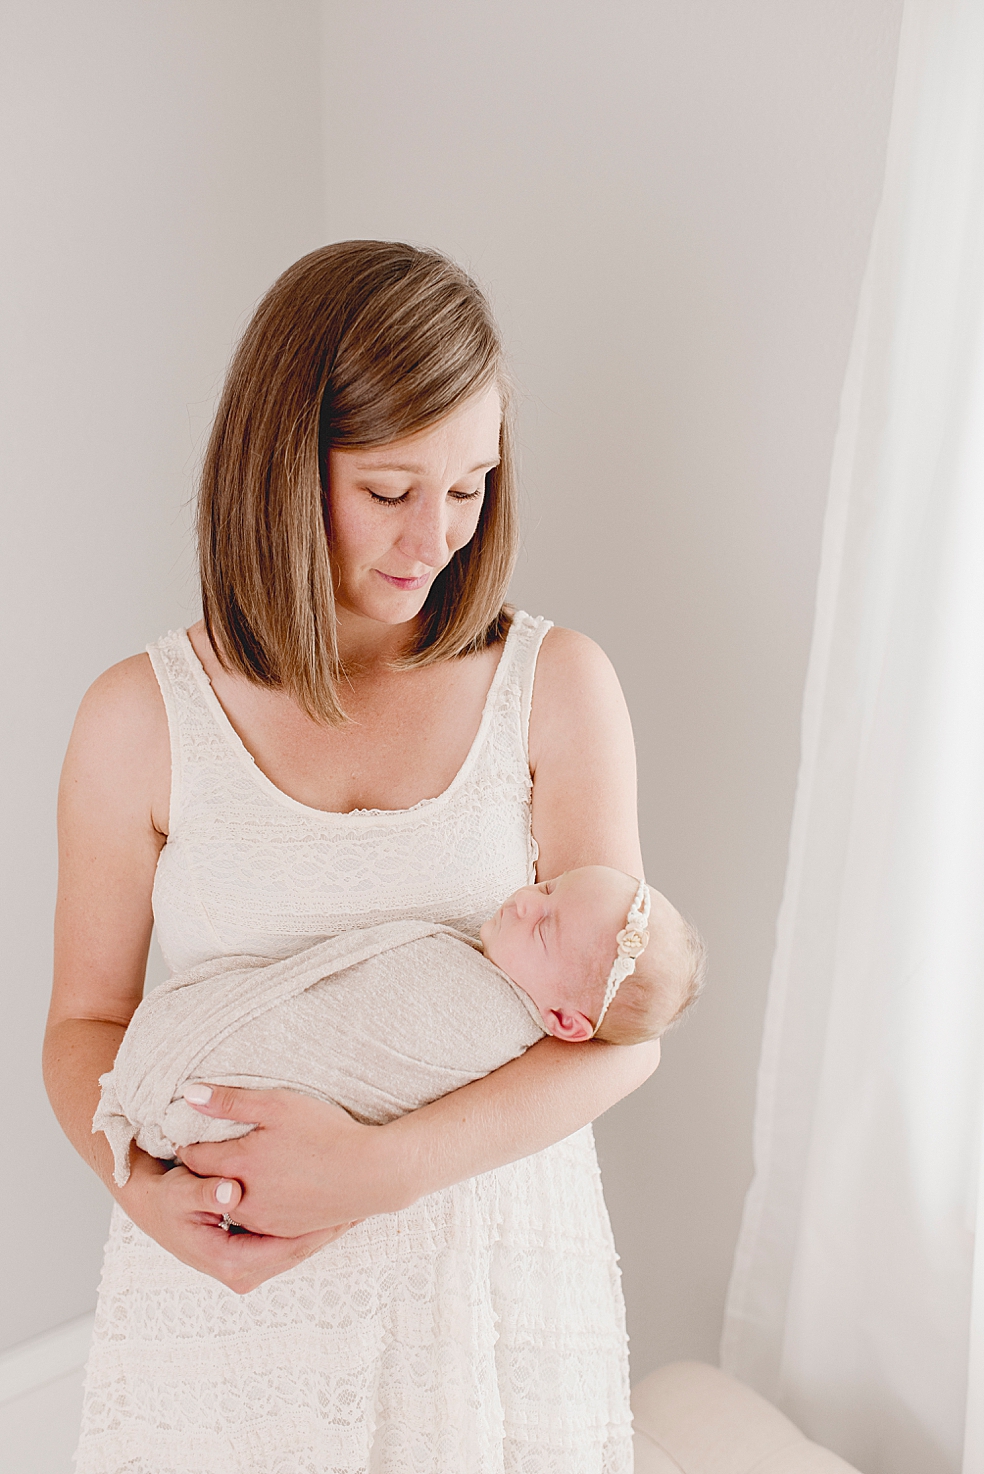 Mom holding her newborn baby girl | Photo by Meridianville Newborn Photographer Jessica Lee